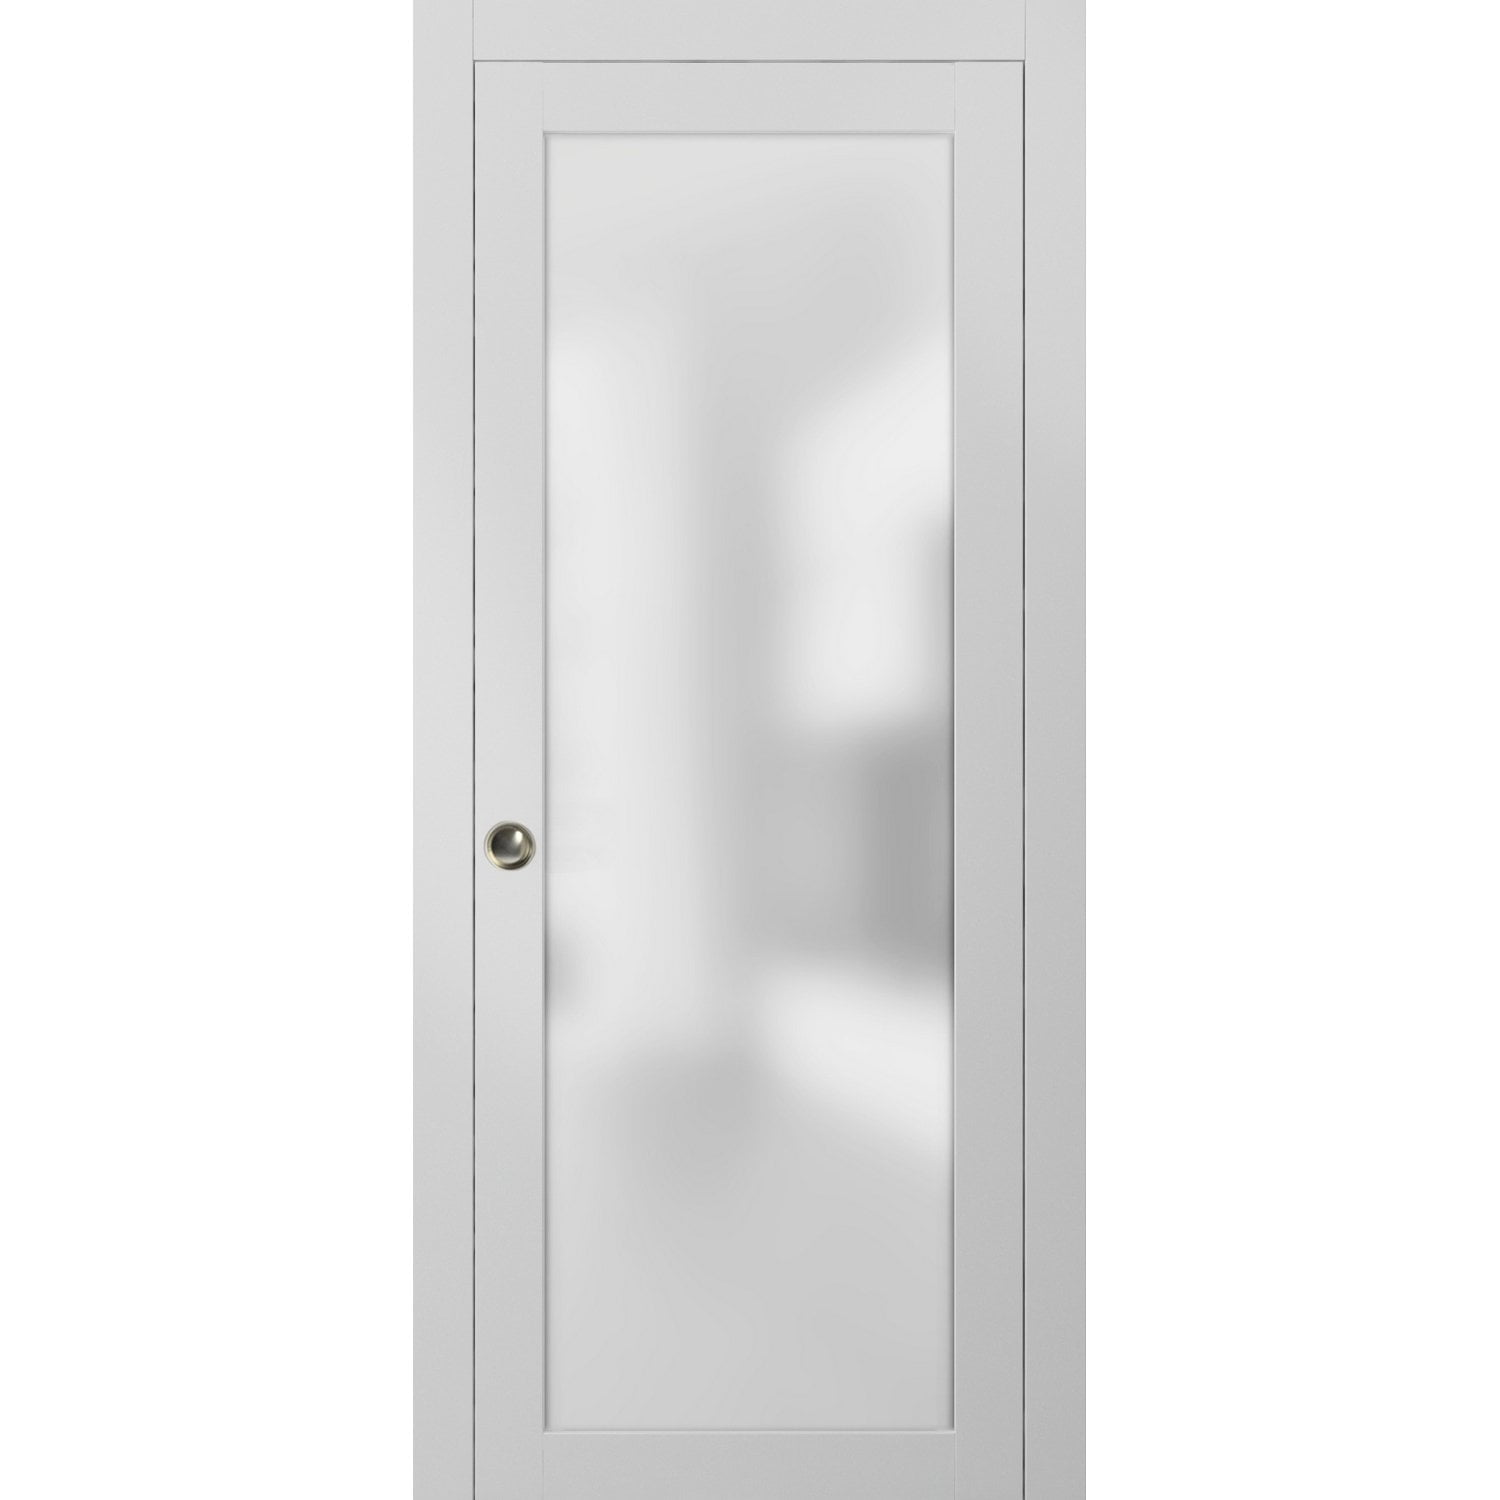 Frosted Glass Pocket Door 36 X 96 Inches Planum 2102 White Silk Sturdy Heavy Frames Trims Pulls Track Hardware Set Bedroom Bathroom Solid Wood Interior Slide Closet Panel Walmart Com Walmart Com